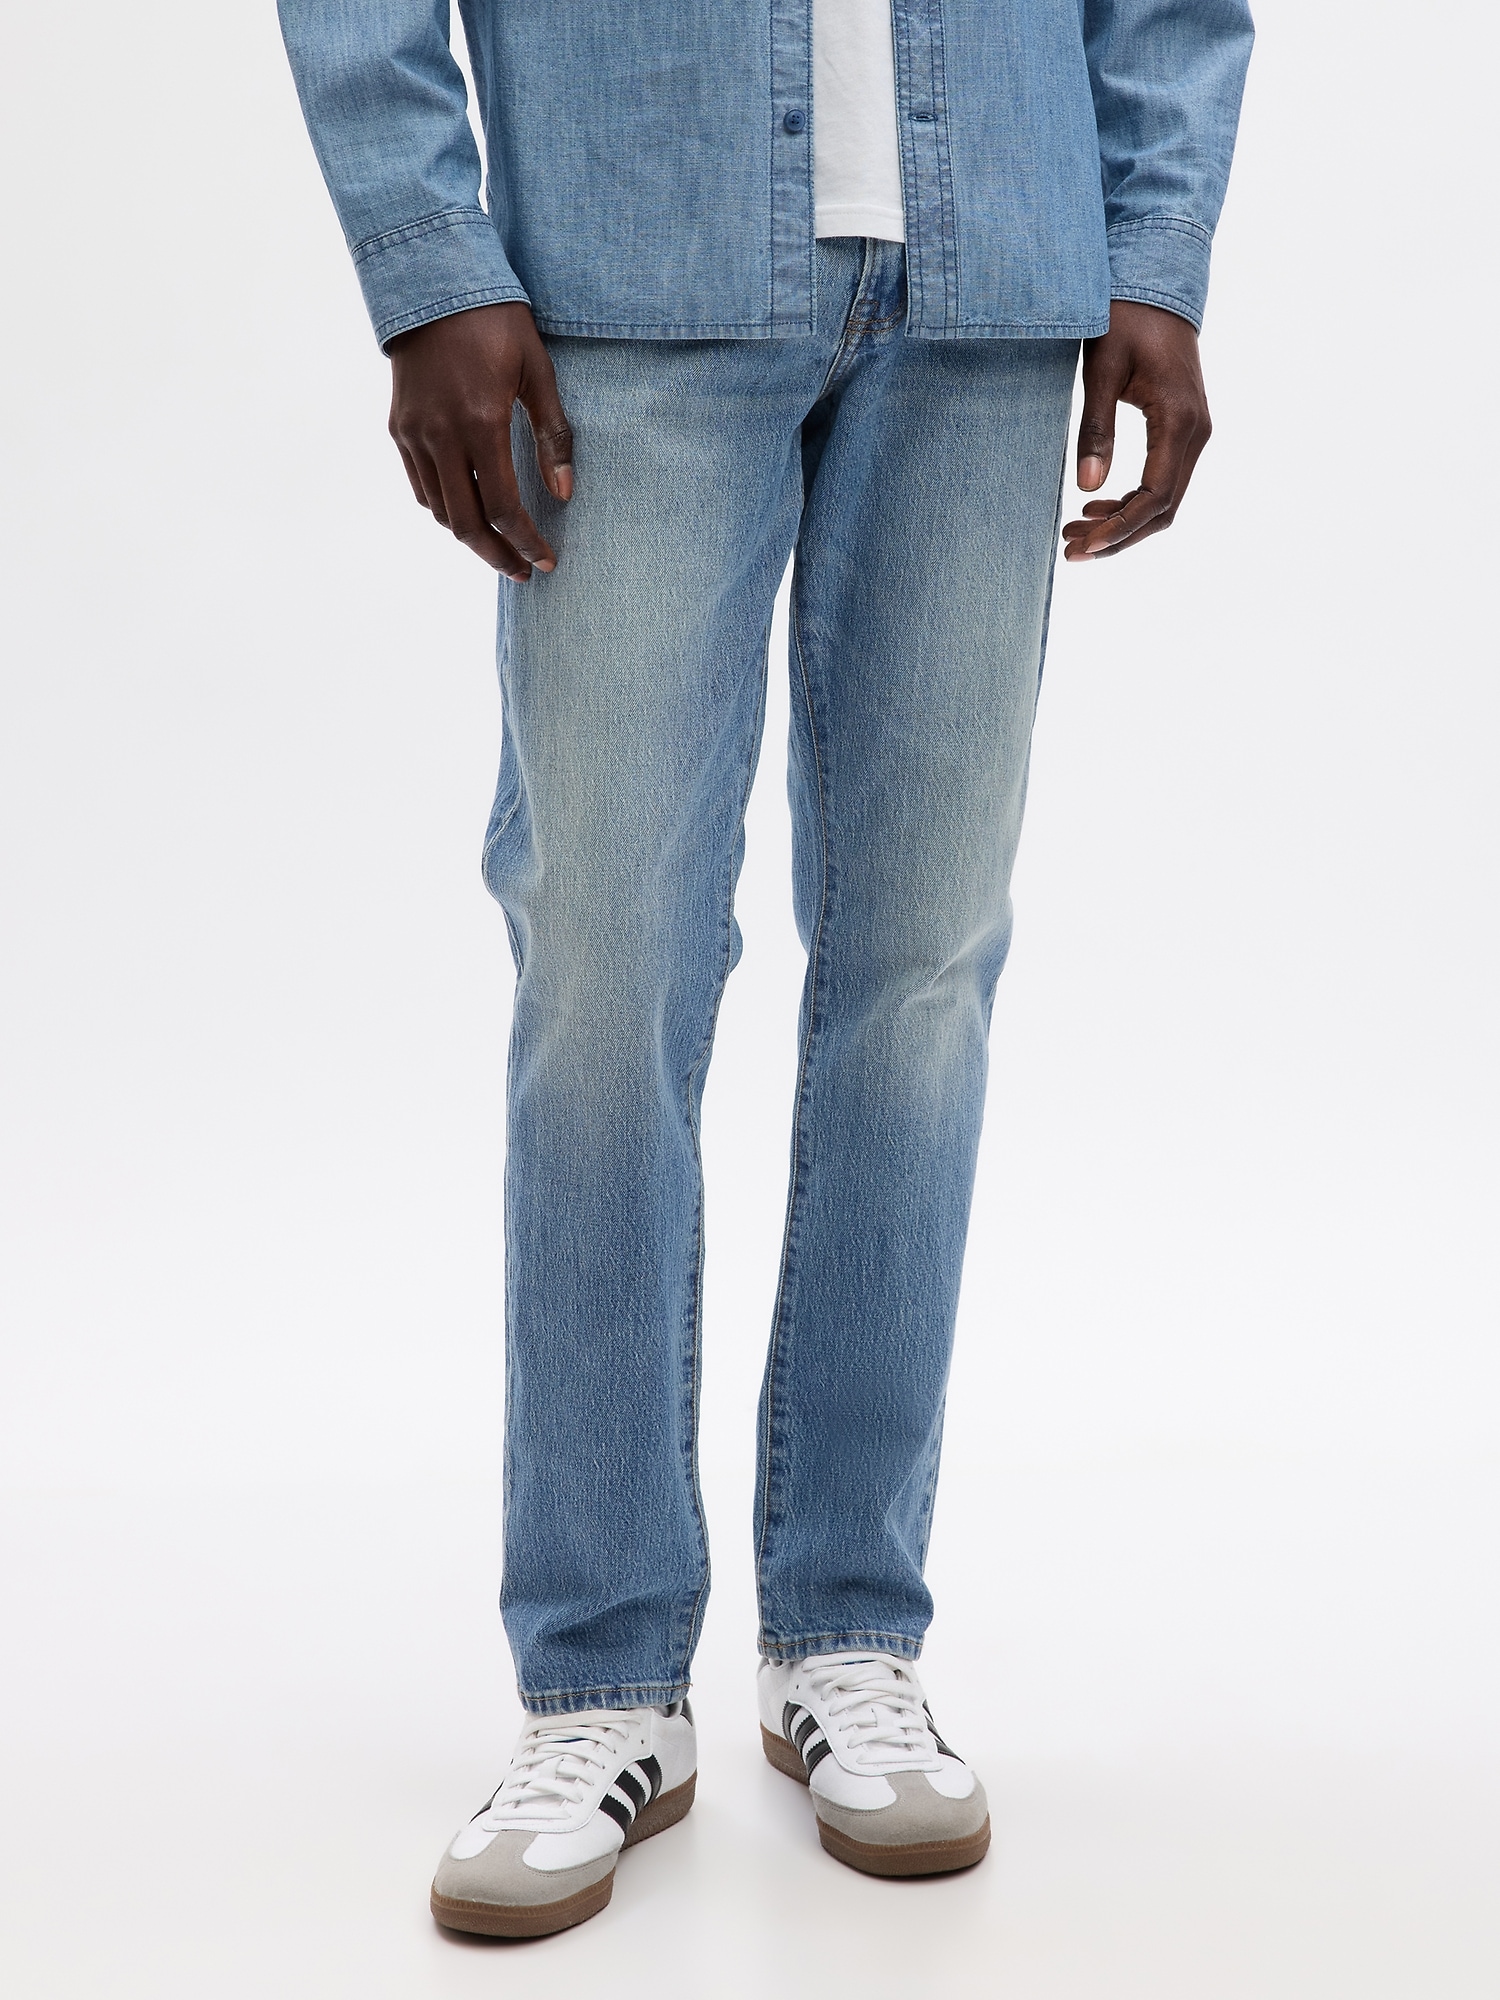 GAP Men's Relaxed Fit Jeans, Authentic Medium, 31W x 32L 